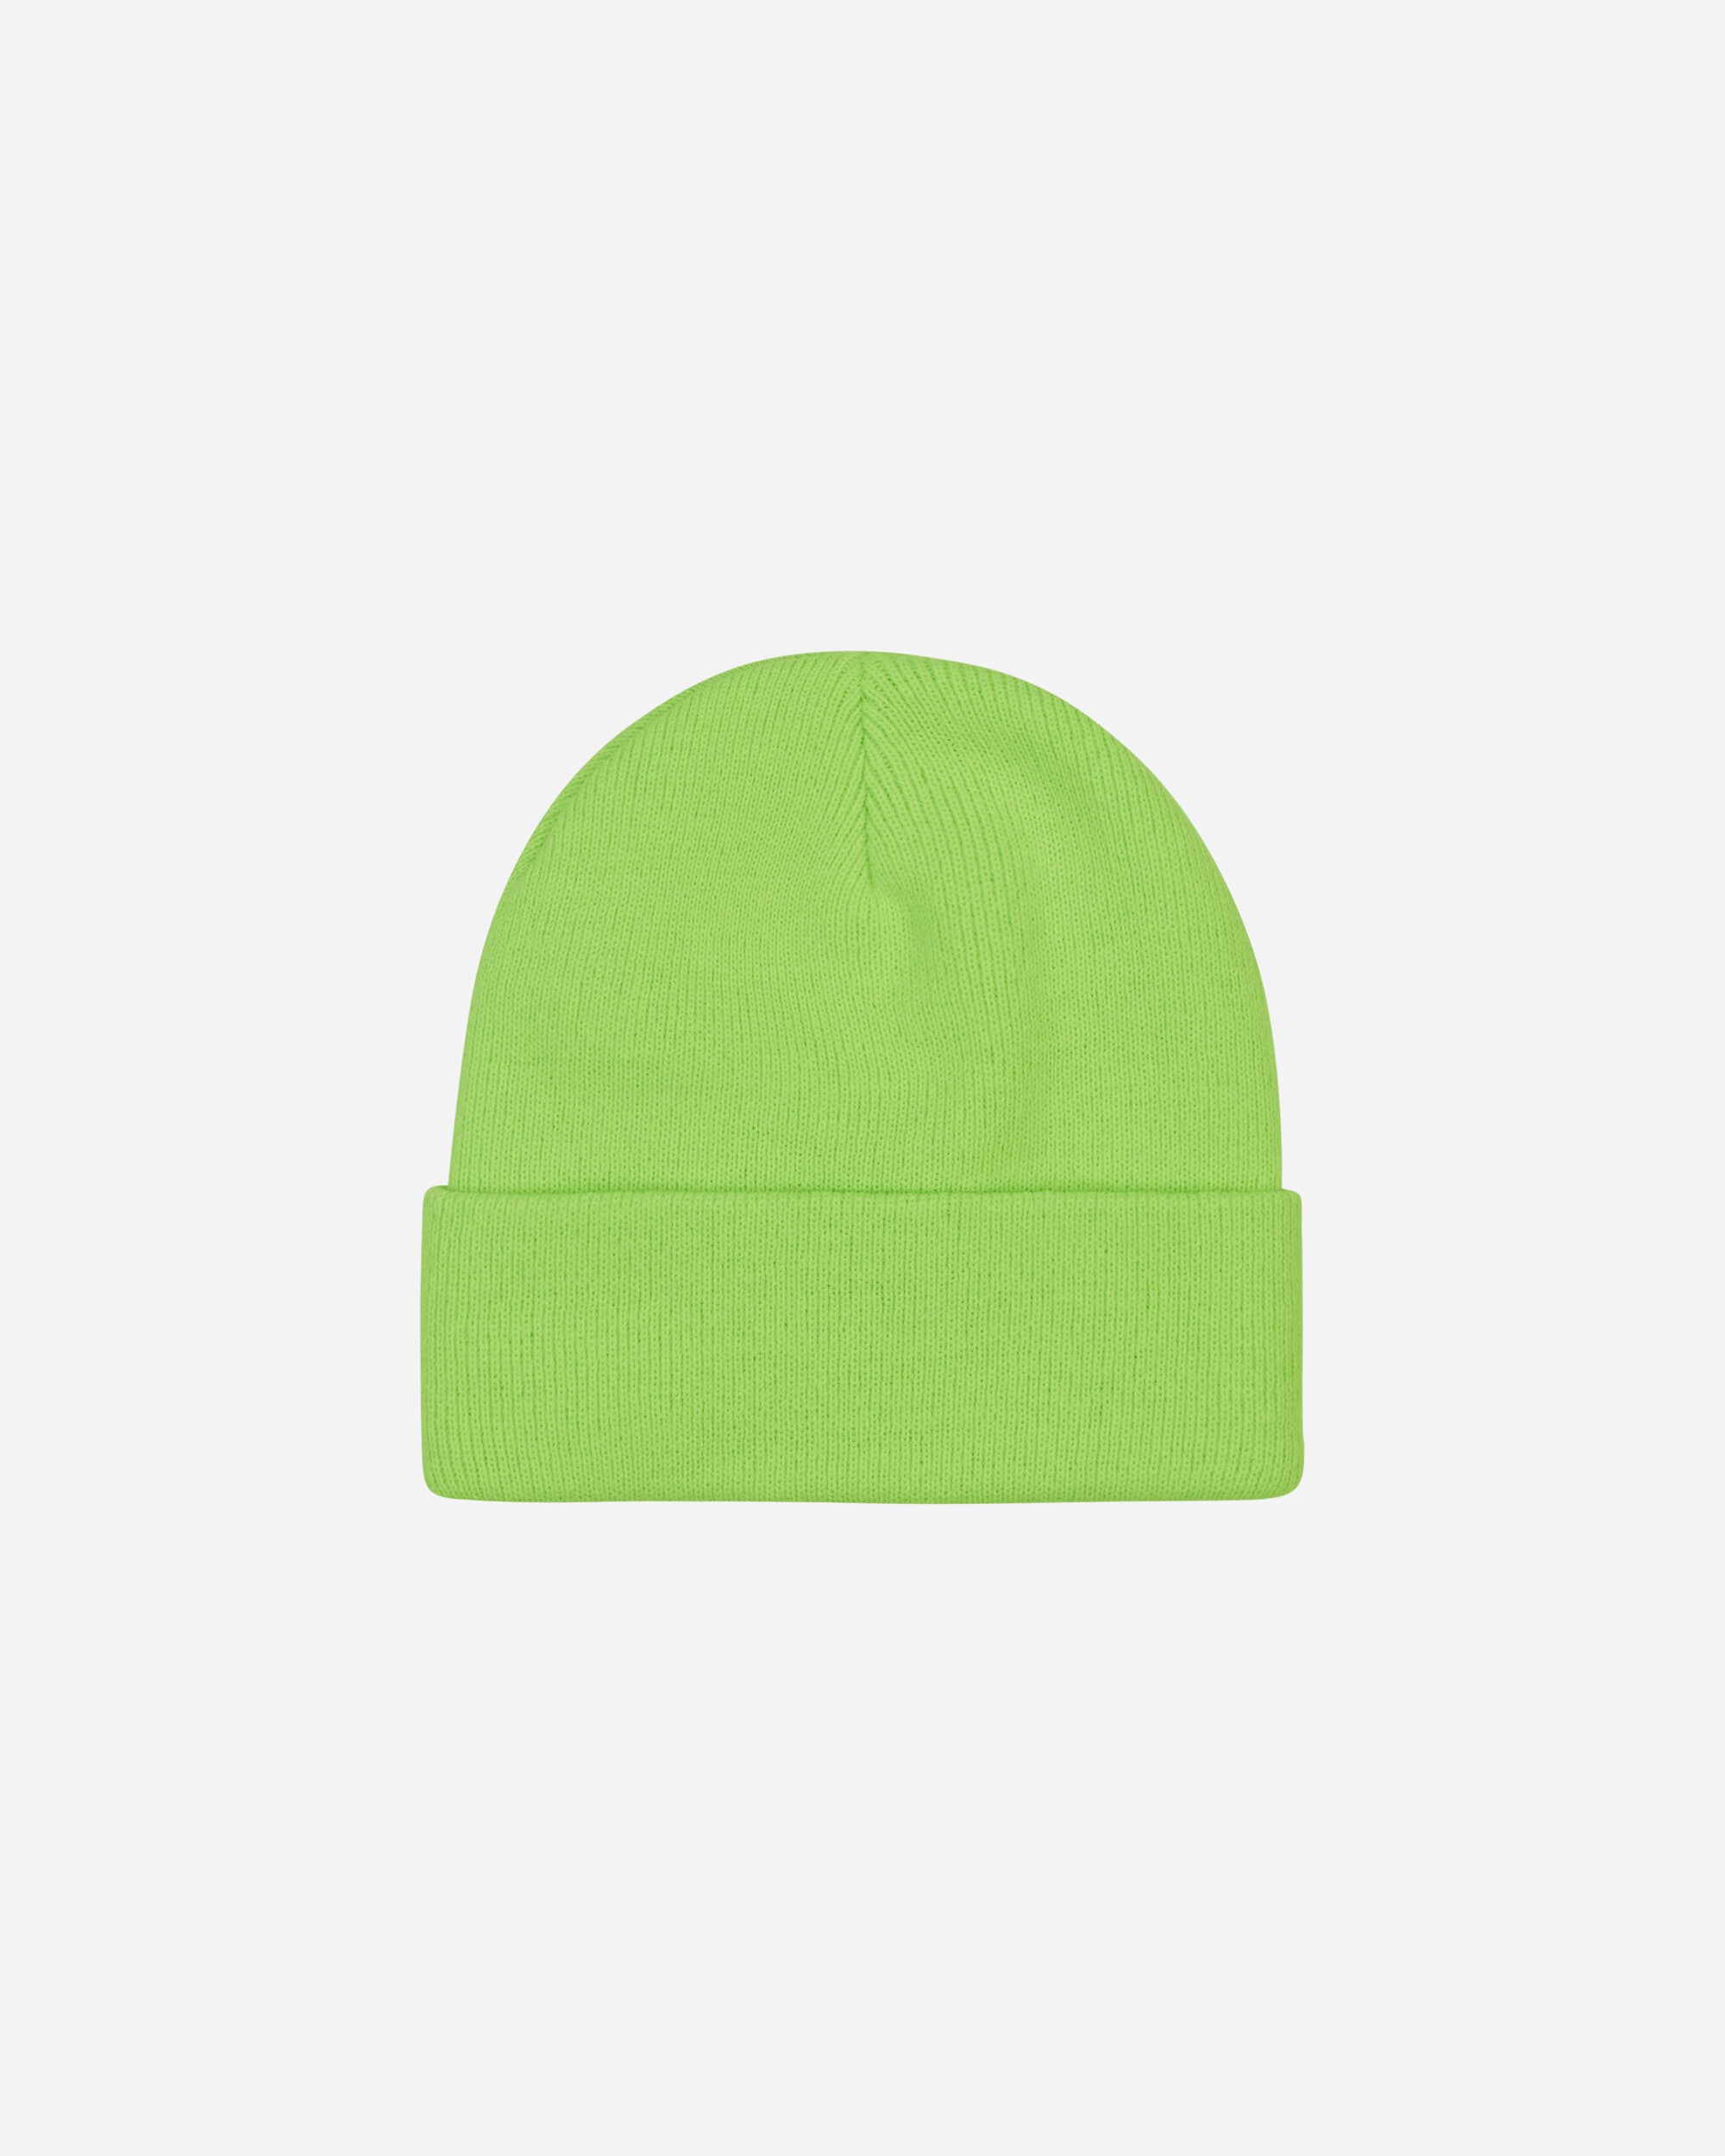 Stüssy Stock Cuff Beanie Flo Green Hats Beanies 1321020 FLGR